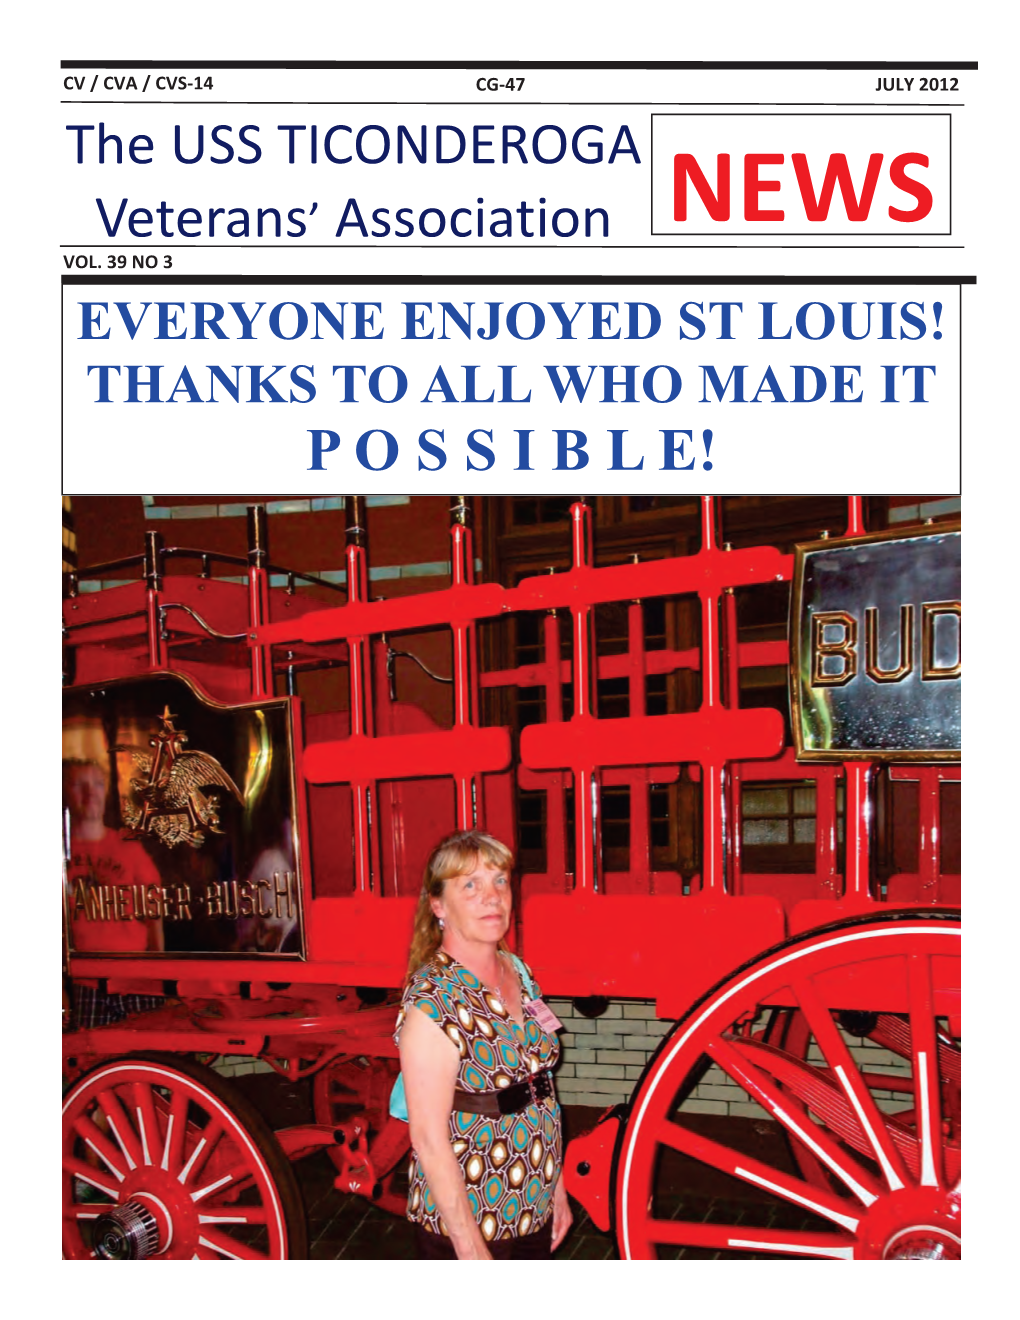 The USS TICONDEROGA Veterans' Association NEWS P O S S I B L E!